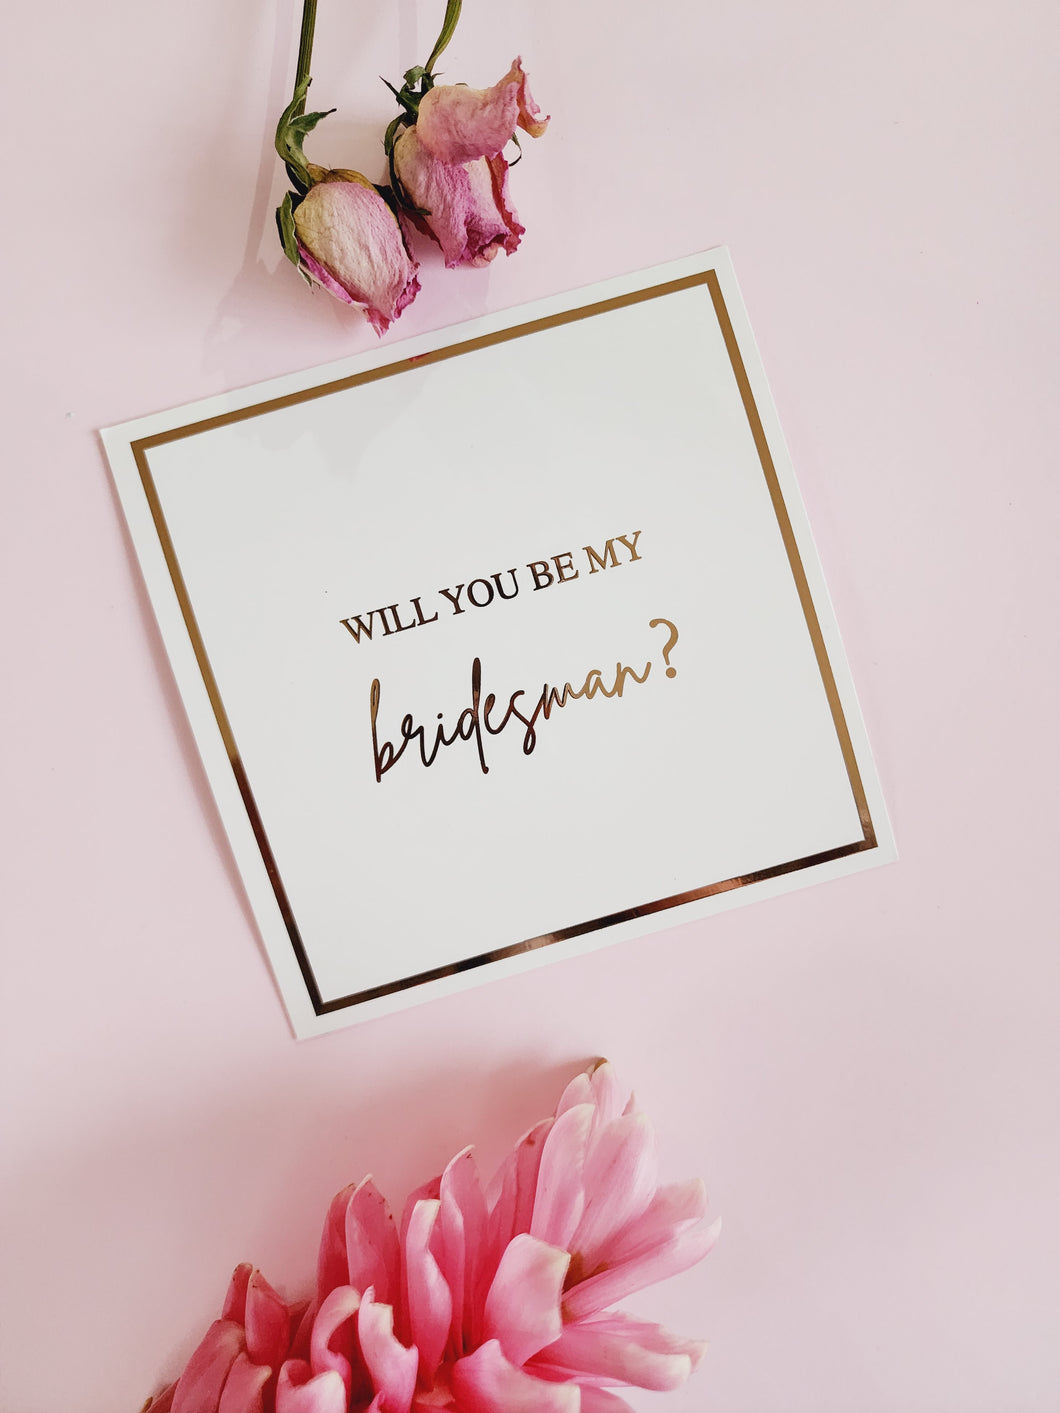 Bridesman -  Box Lid Proposal Card